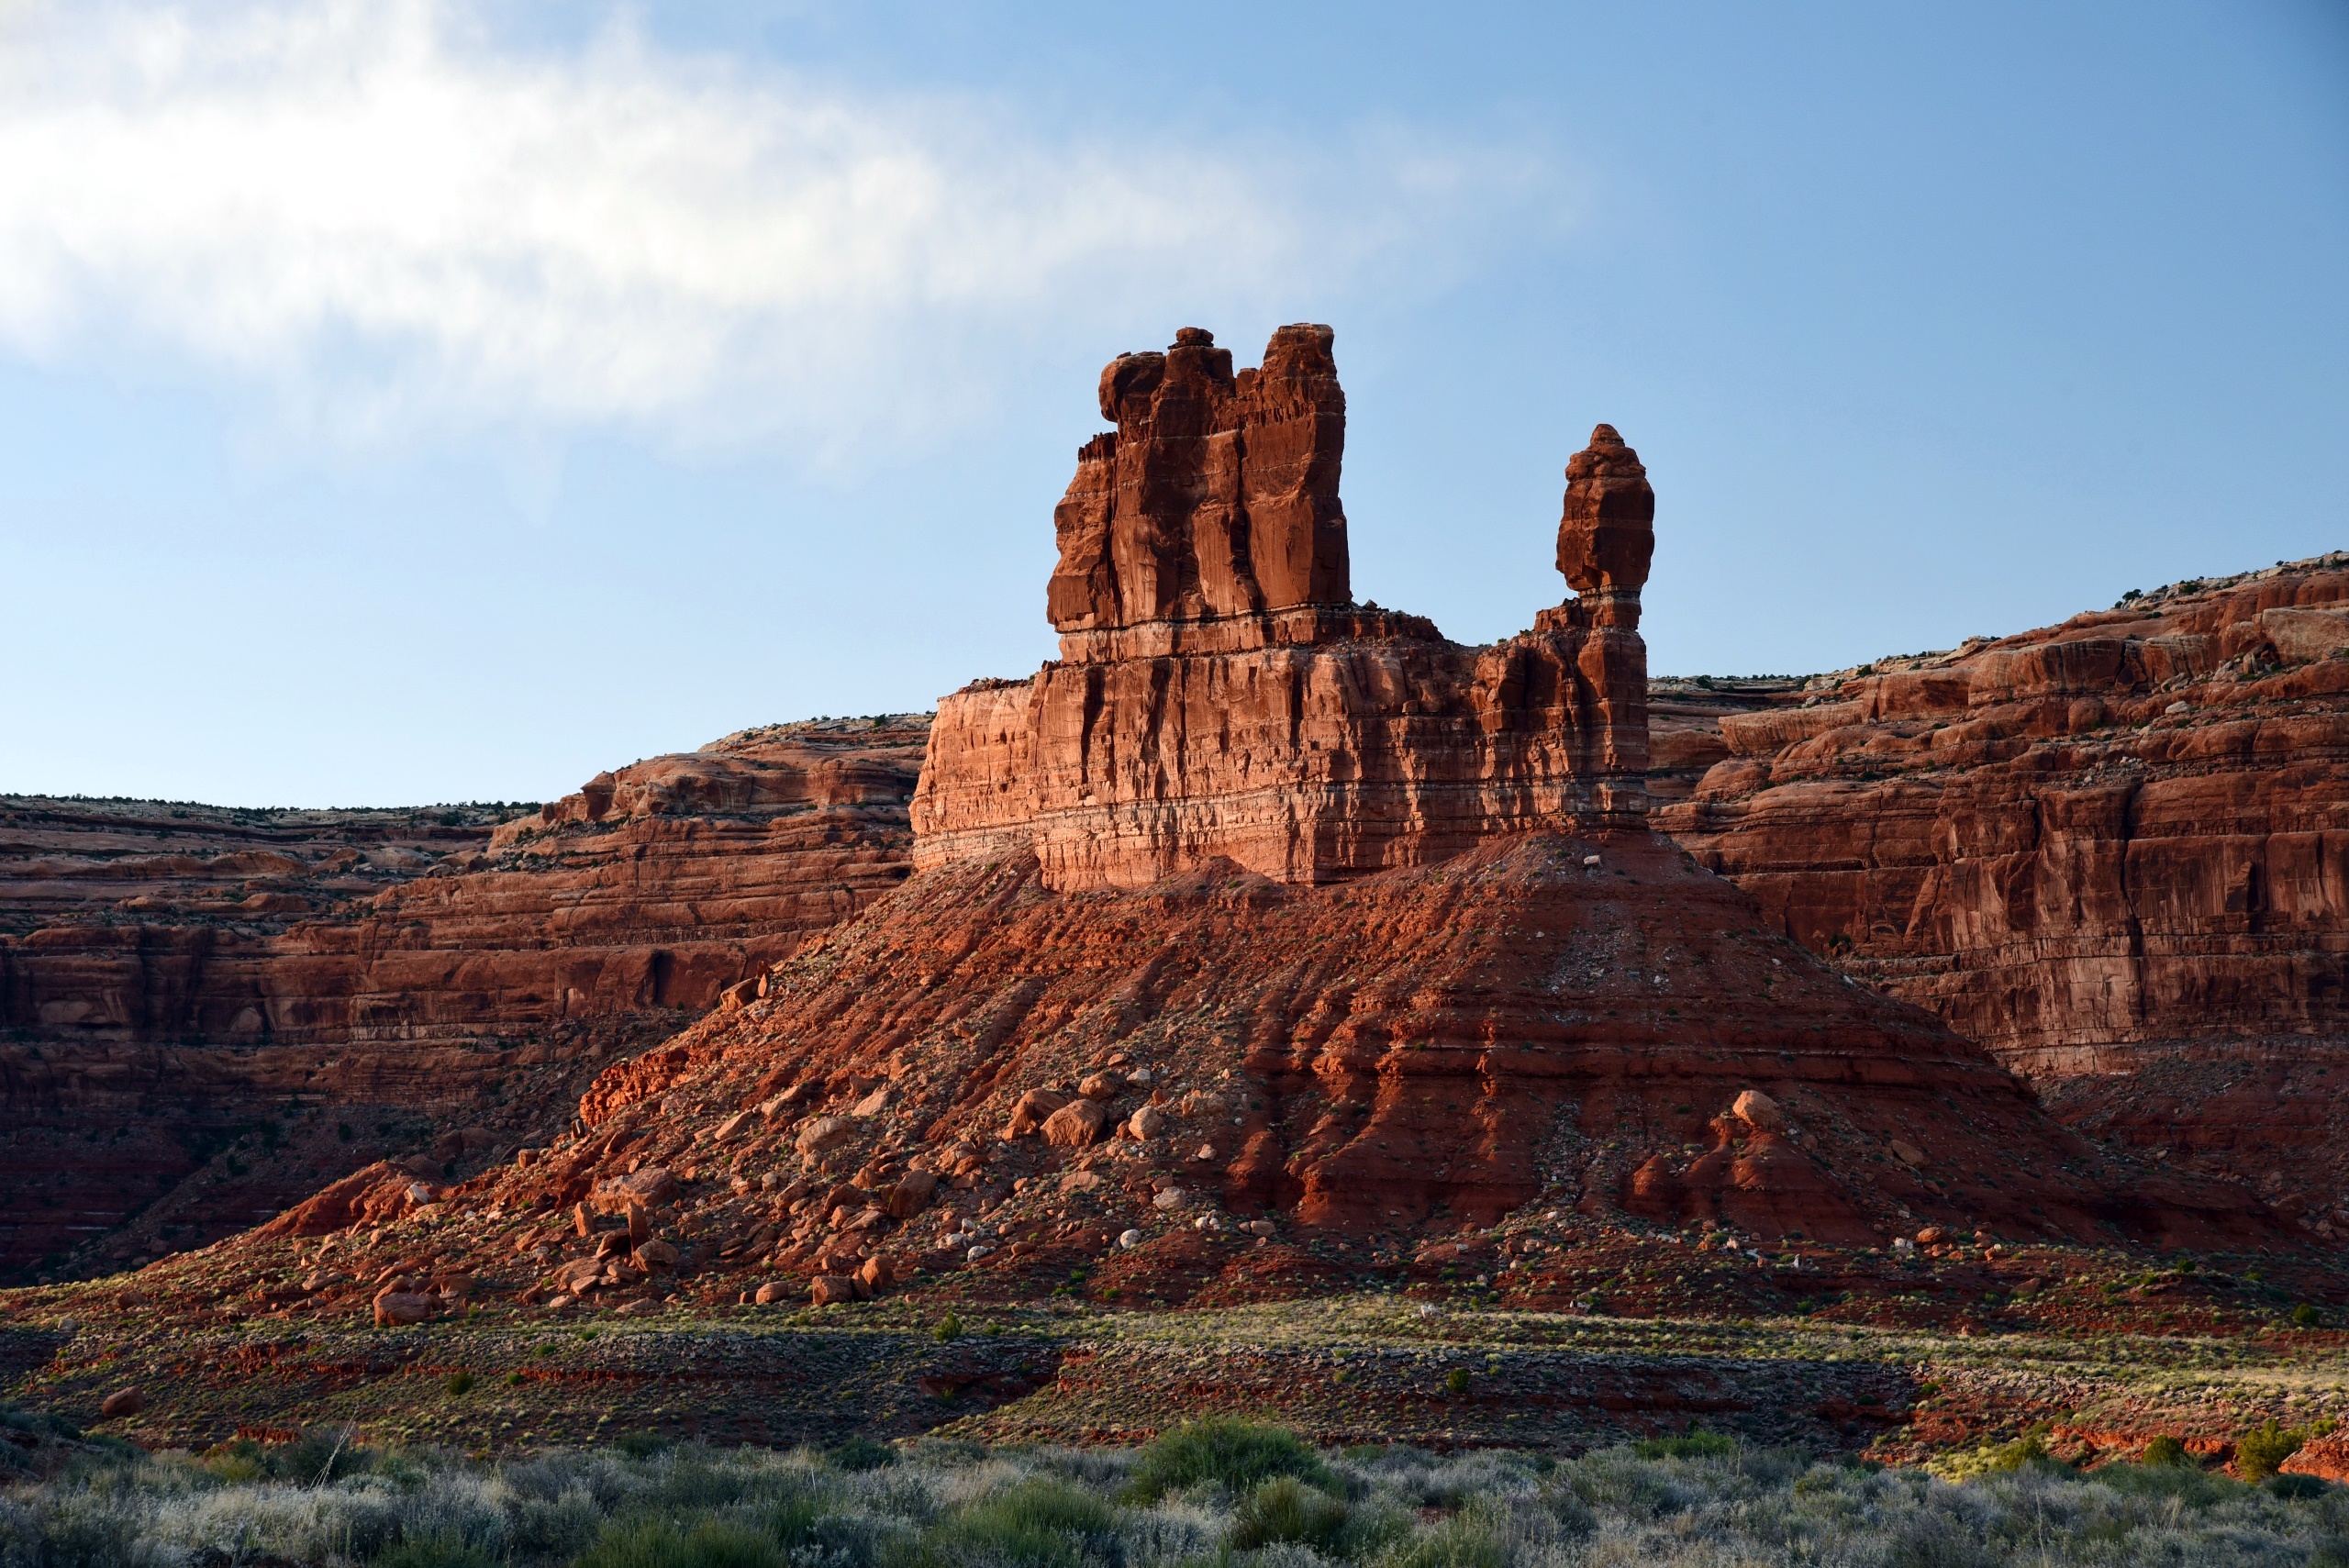 General 2560x1709 rocks nature Utah outdoors USA rock formation